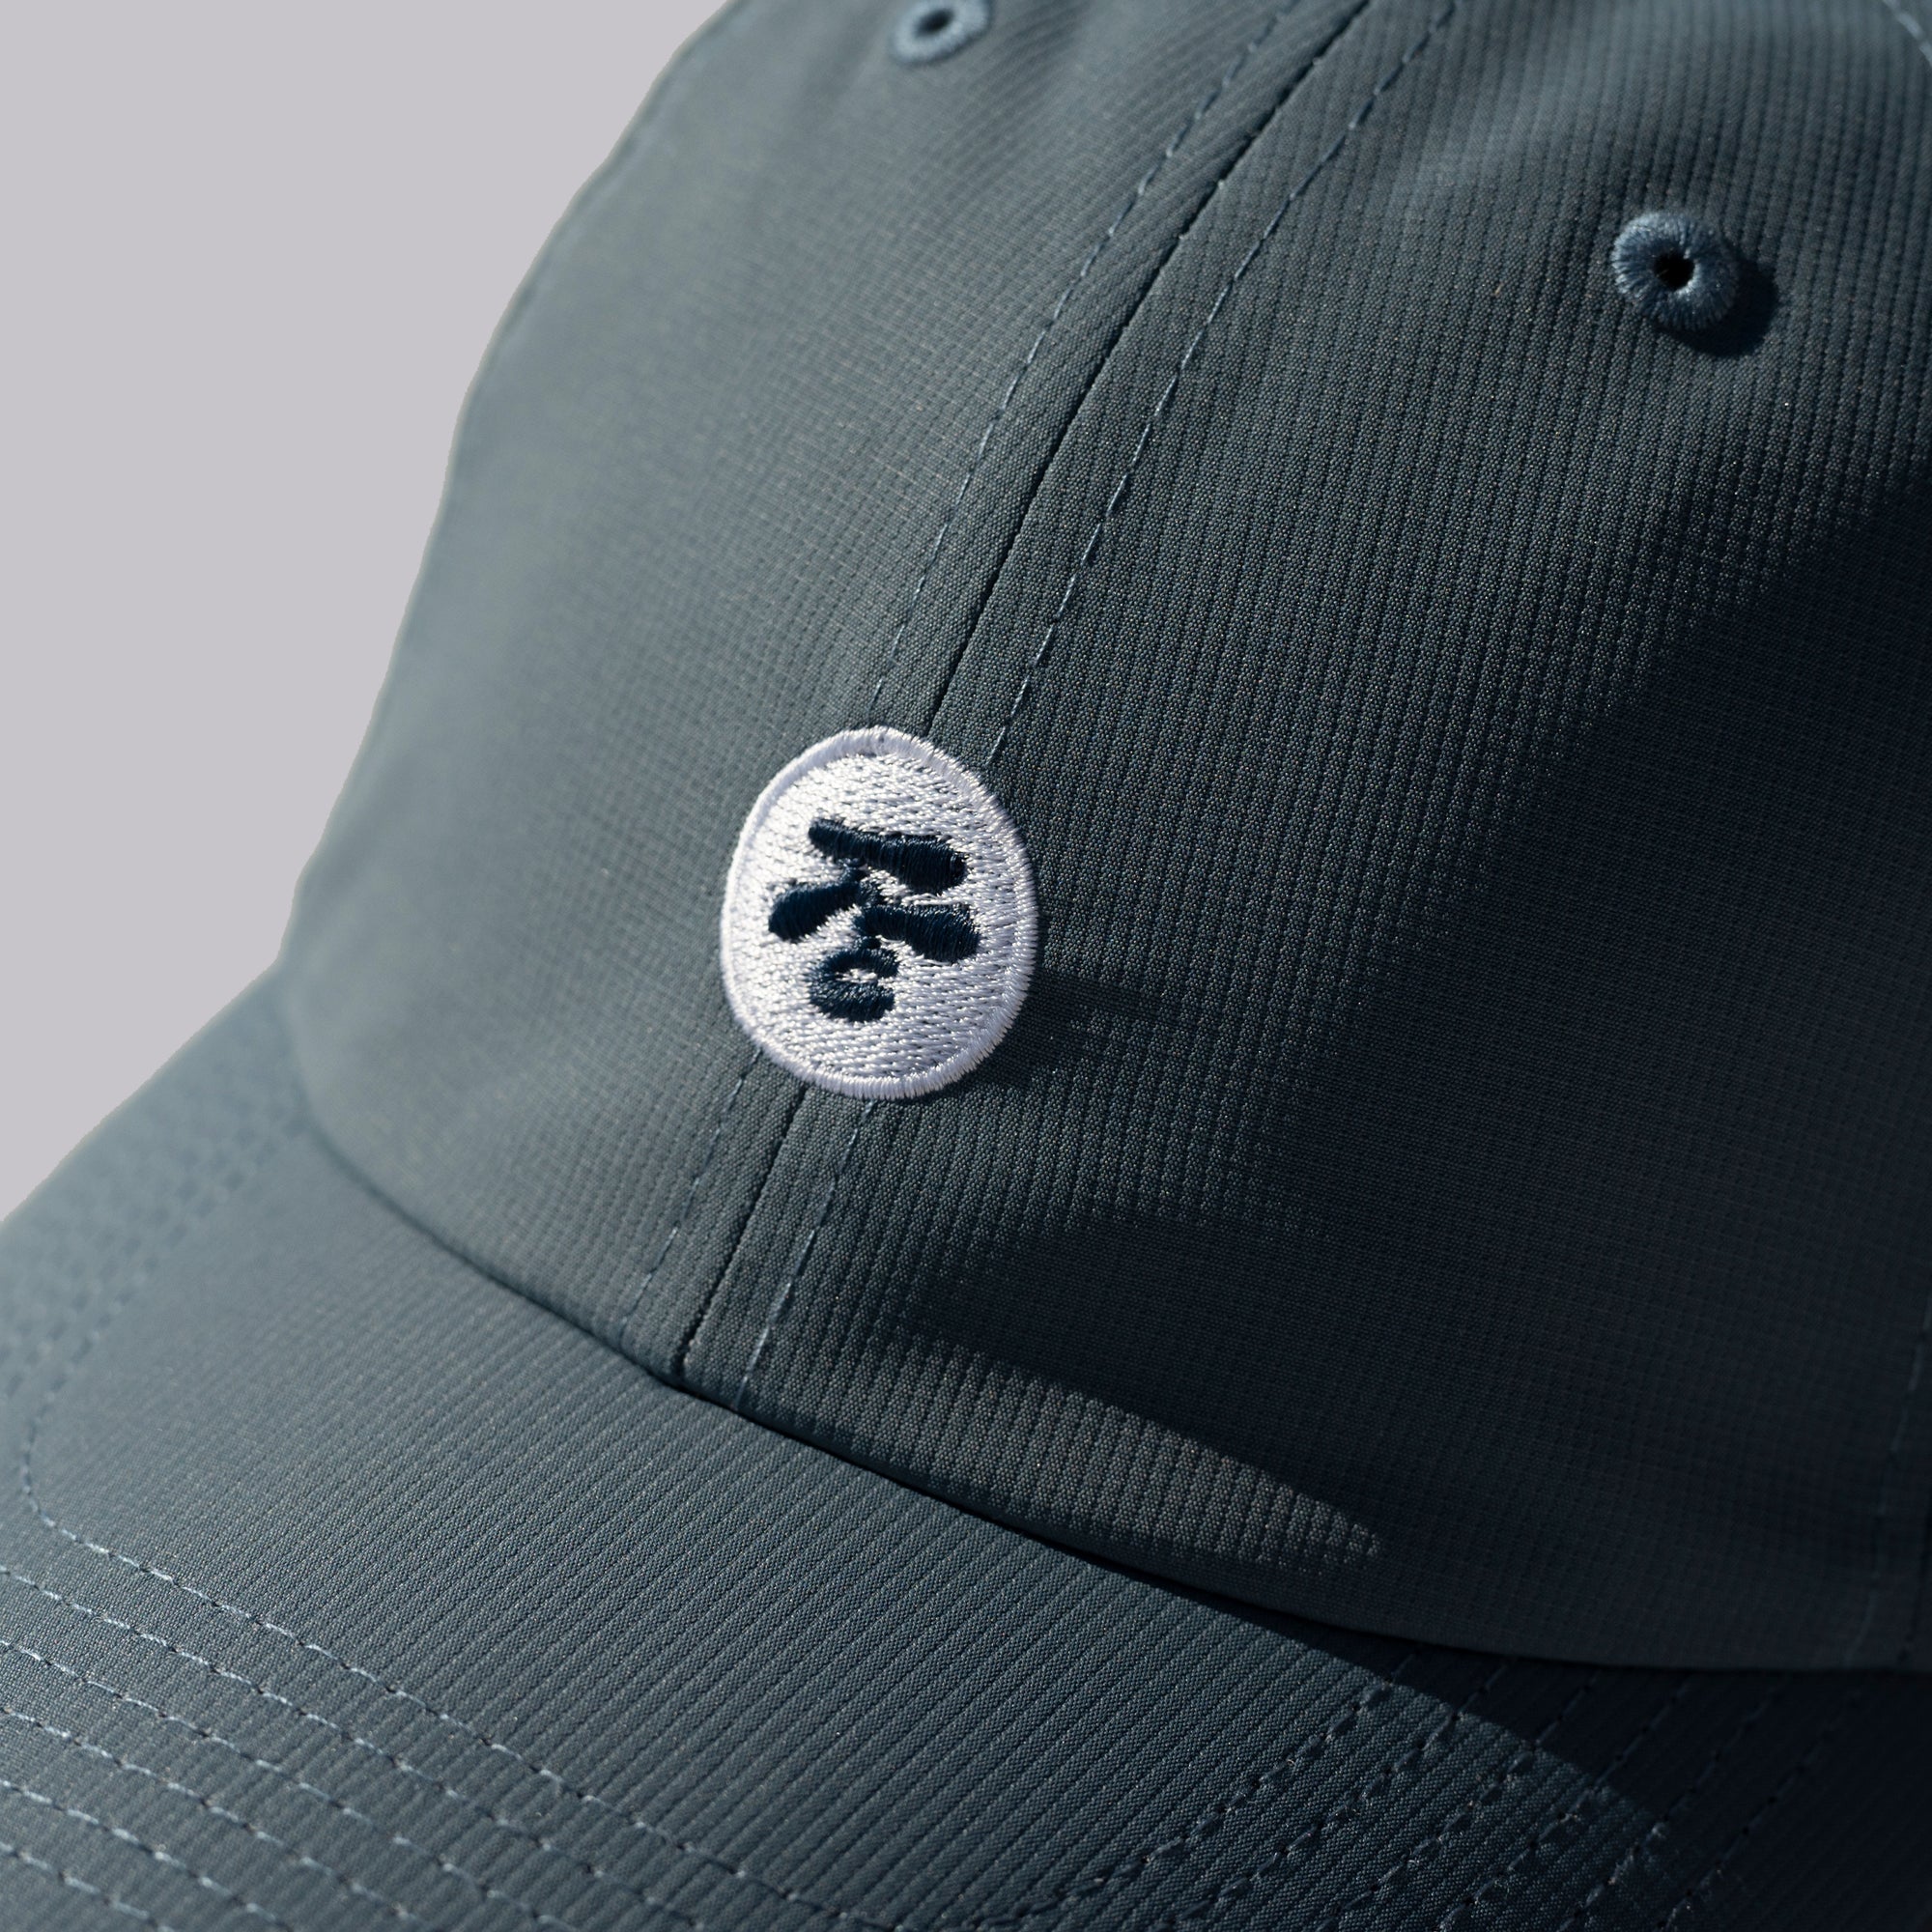 Fried Egg Golf & Imperial Monogram Patch Performance Hat - Breaker Blue